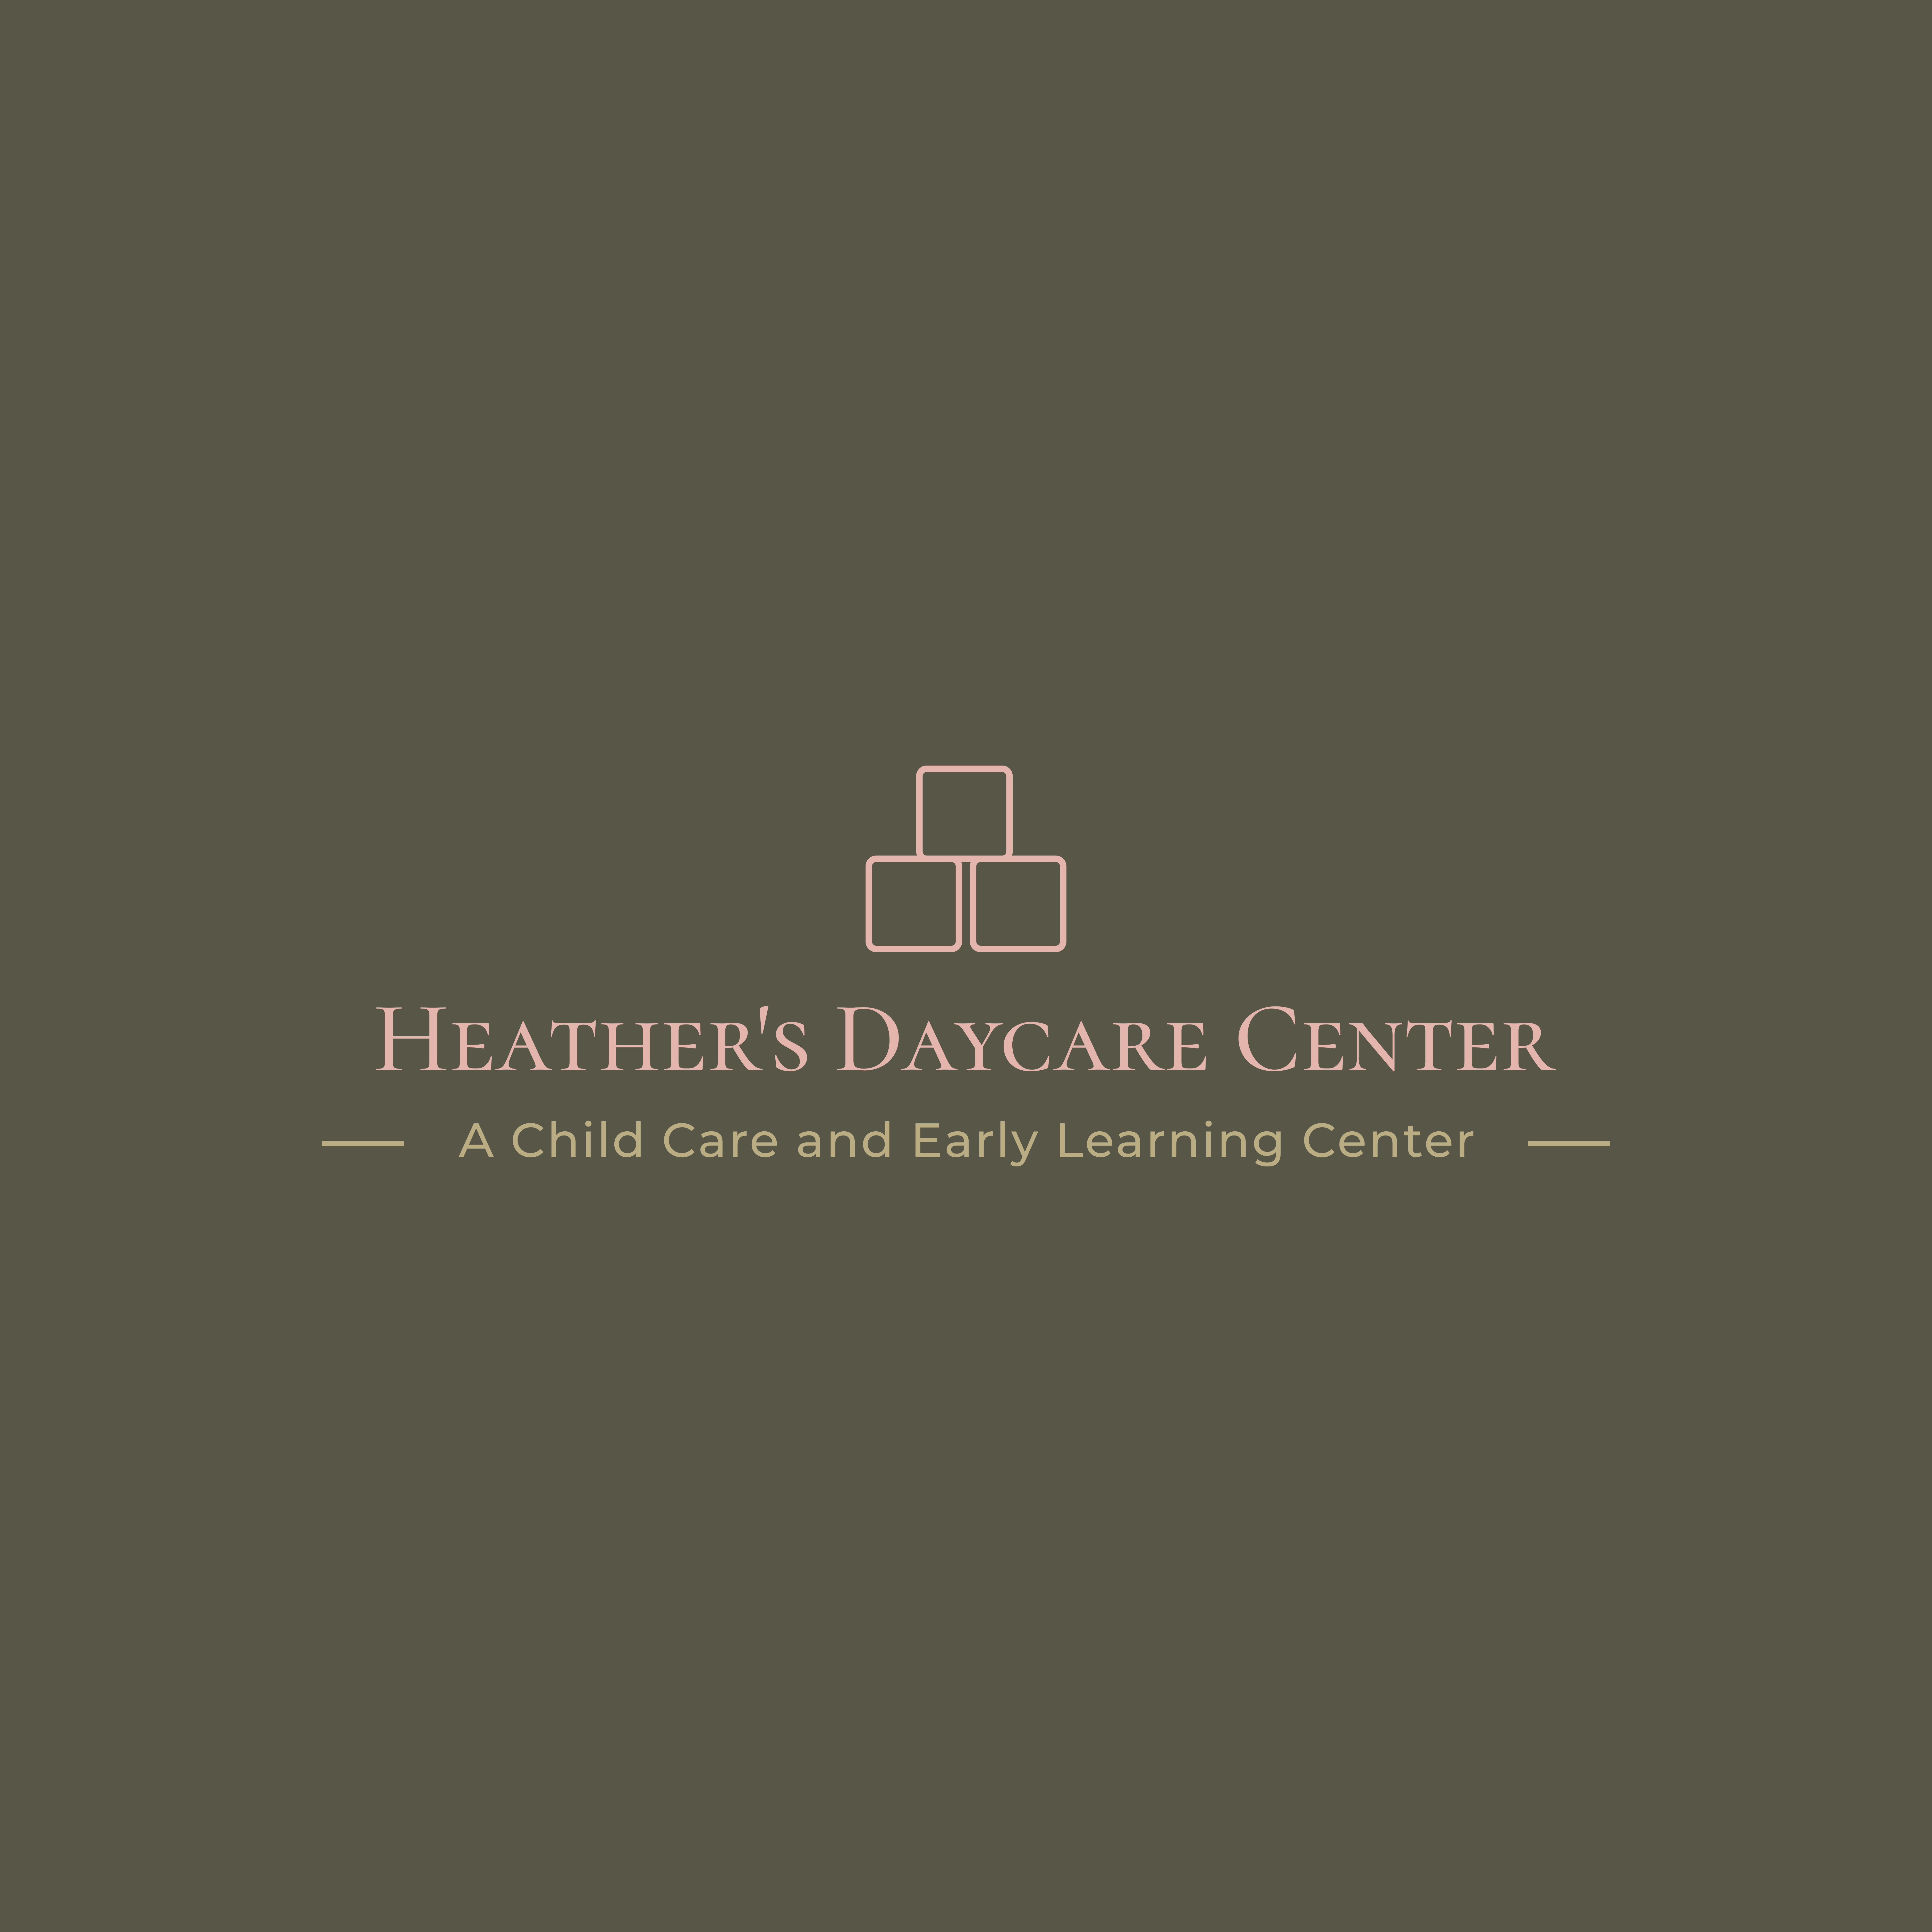 Heather's Daycare Center logo